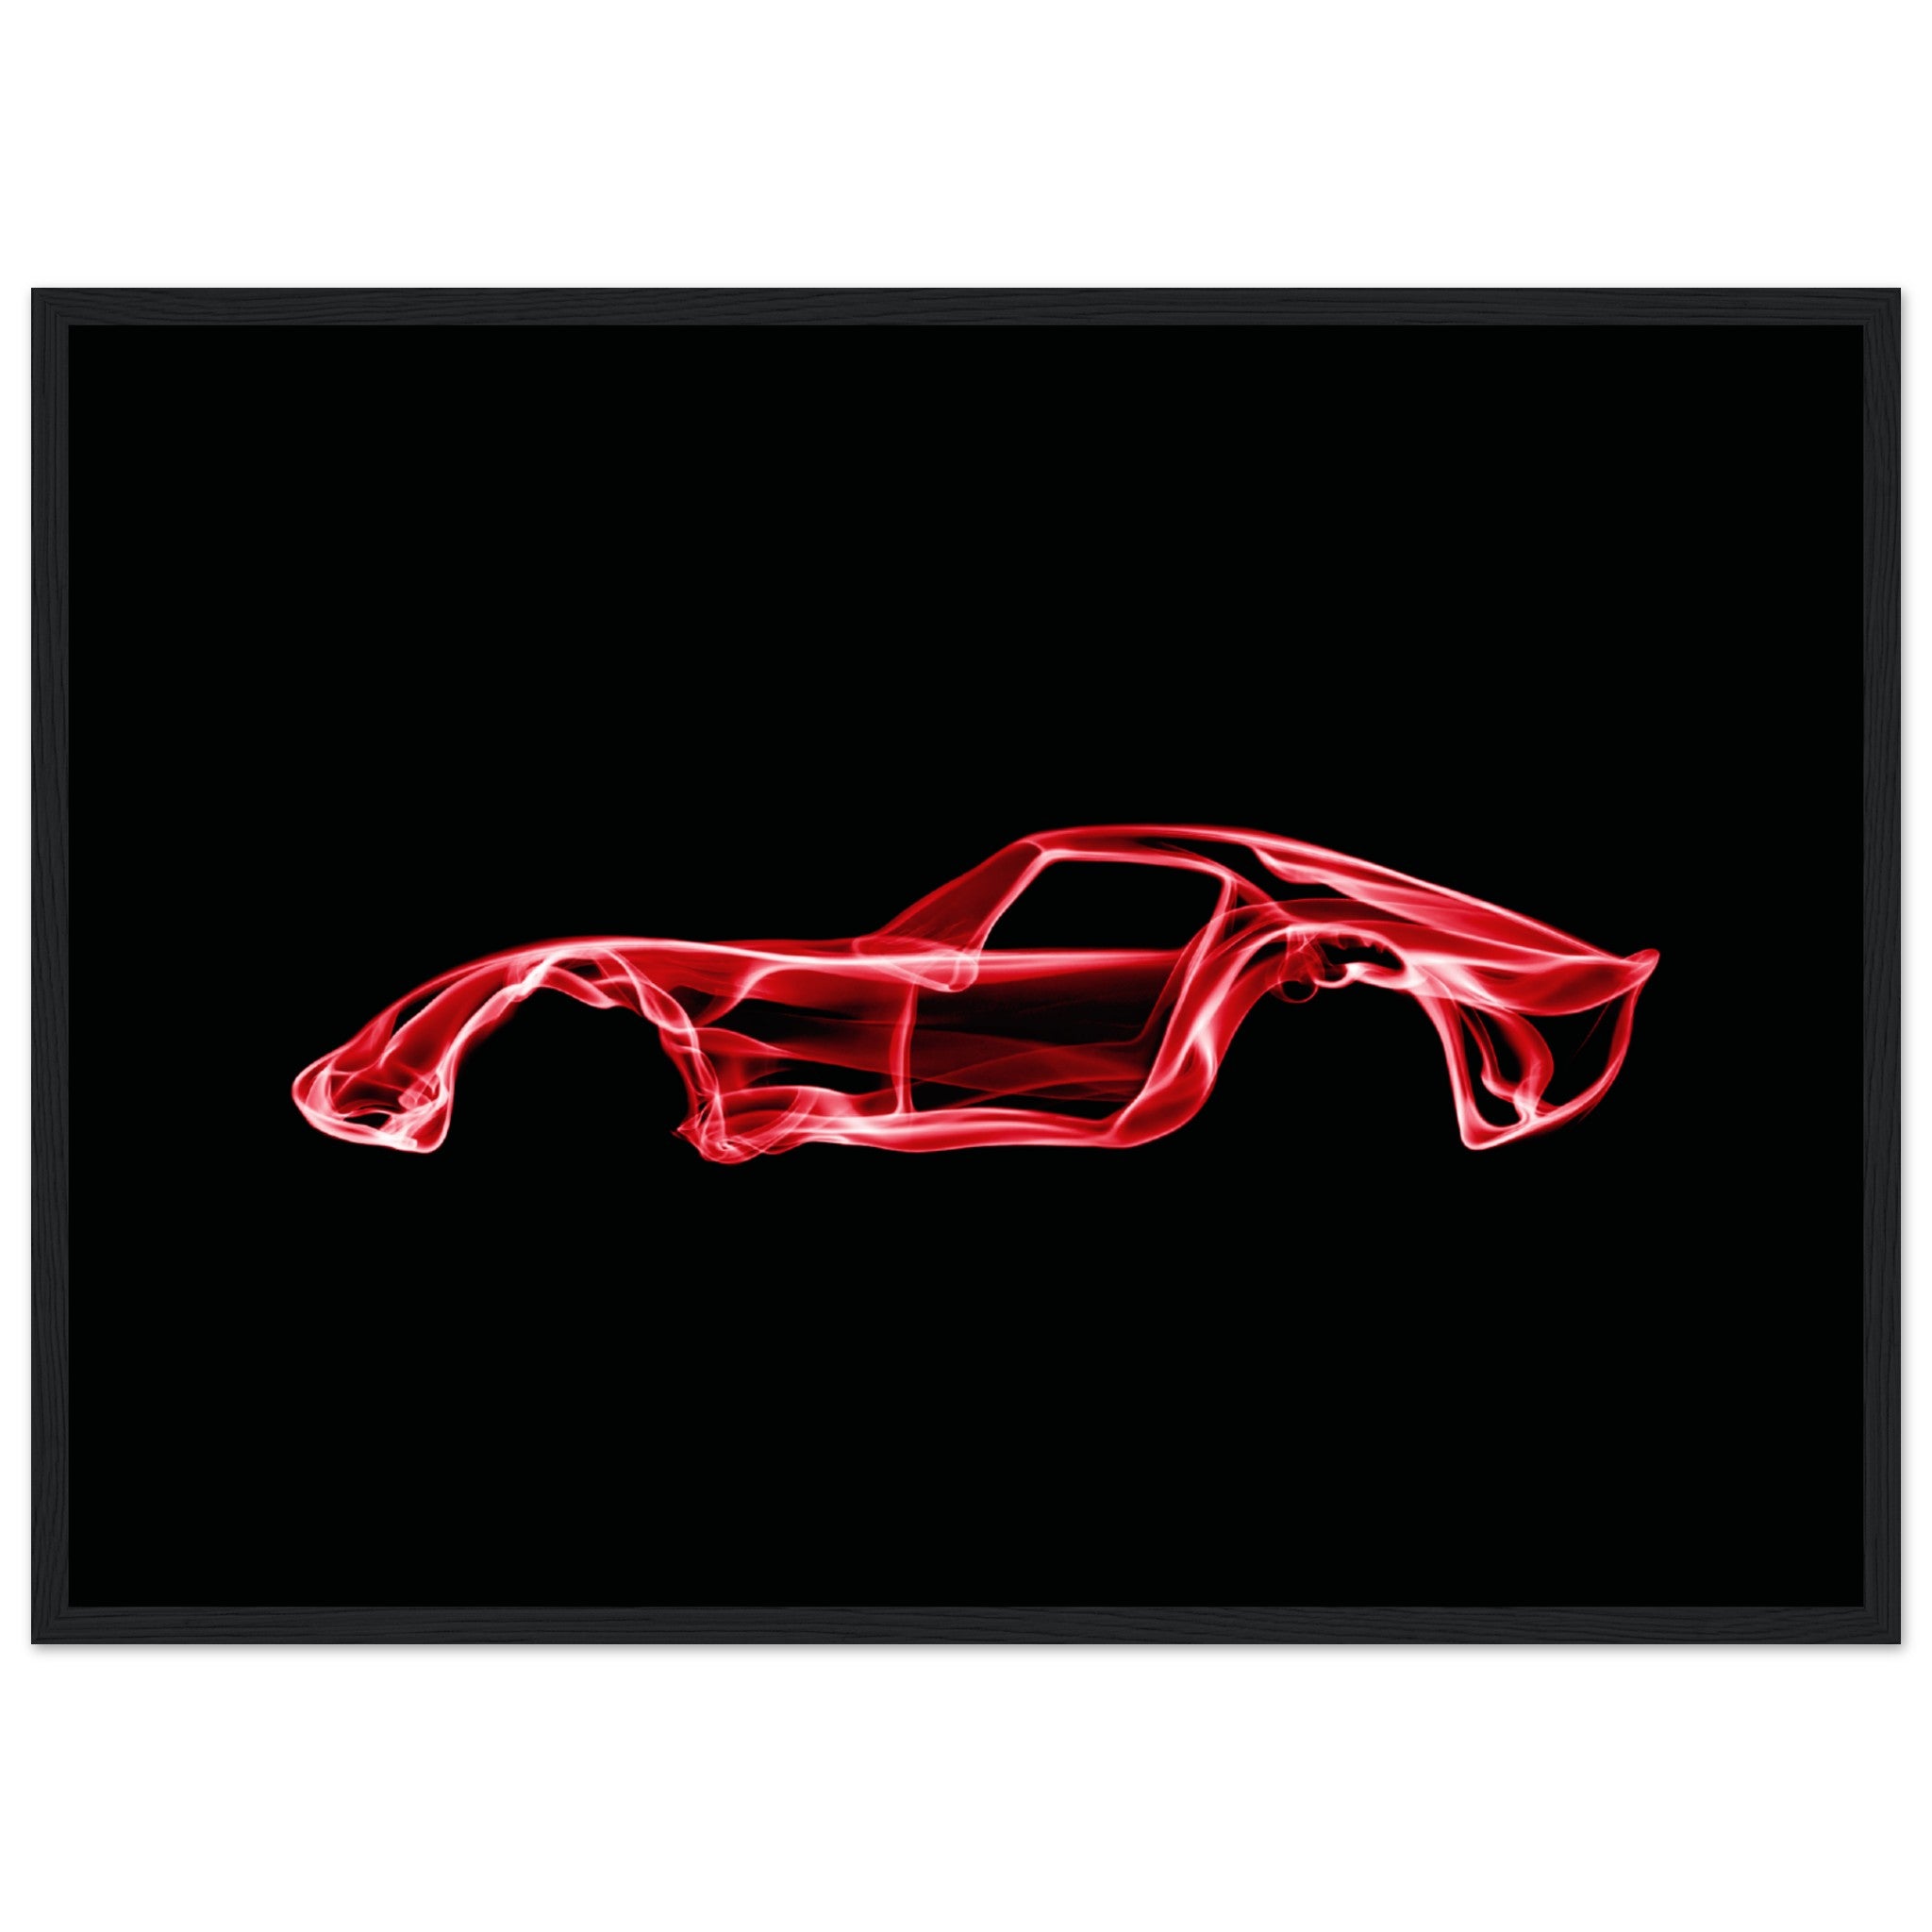 Ferrari 250 GTO Poster